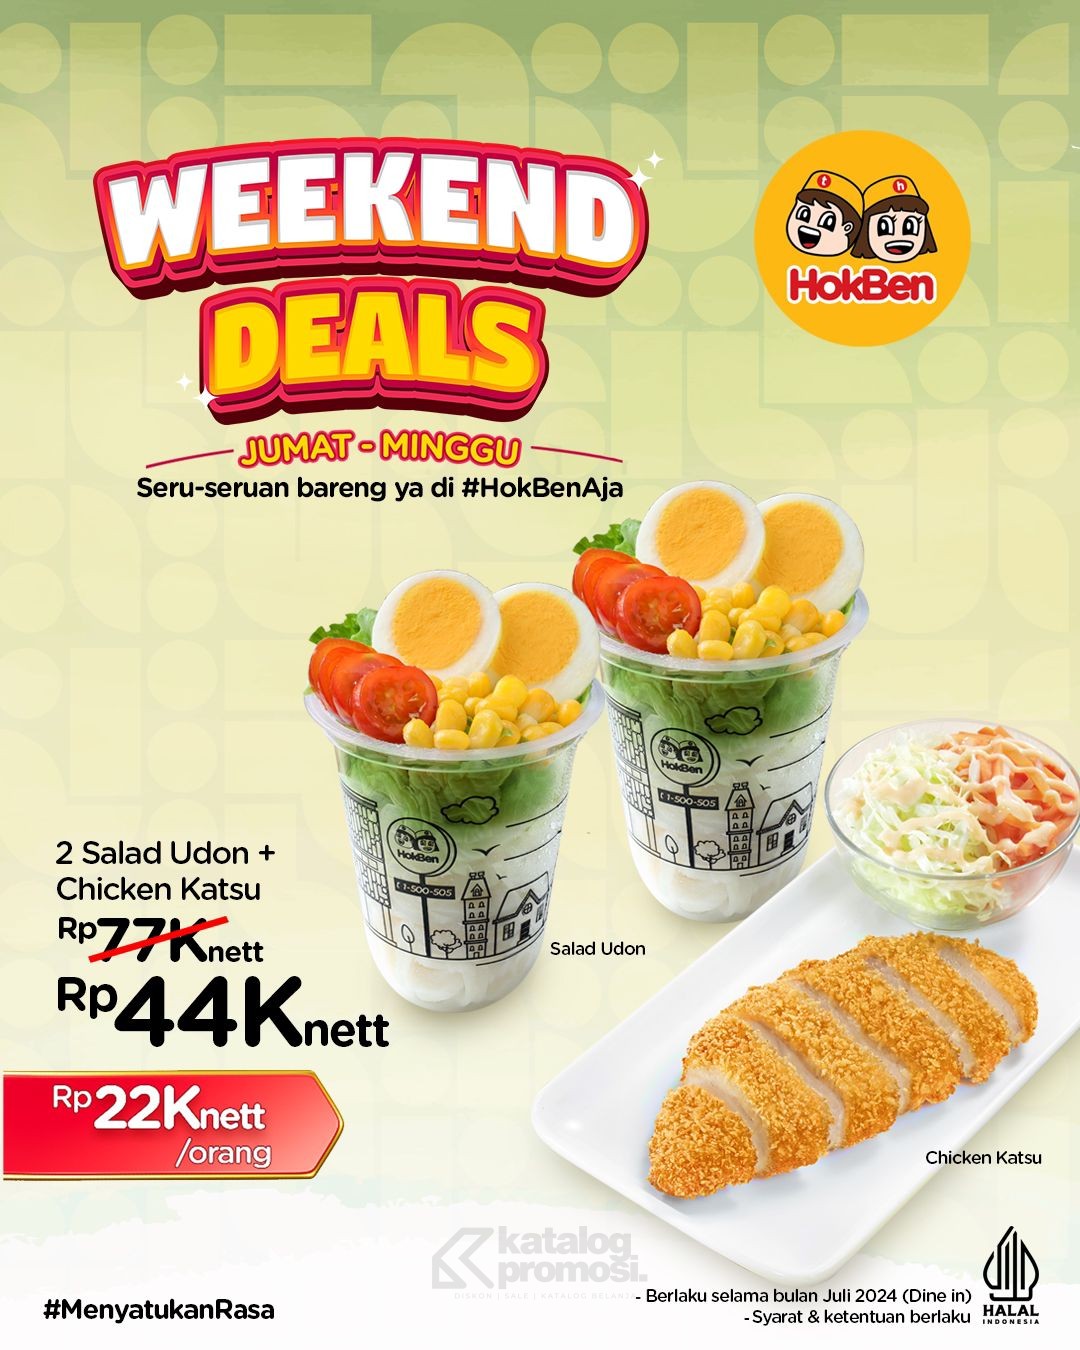 Promo Hokben Spesial Weekend Paket 2 Salad Udon + 1 Chicken Katsu hanya Rp. 44.000 nett